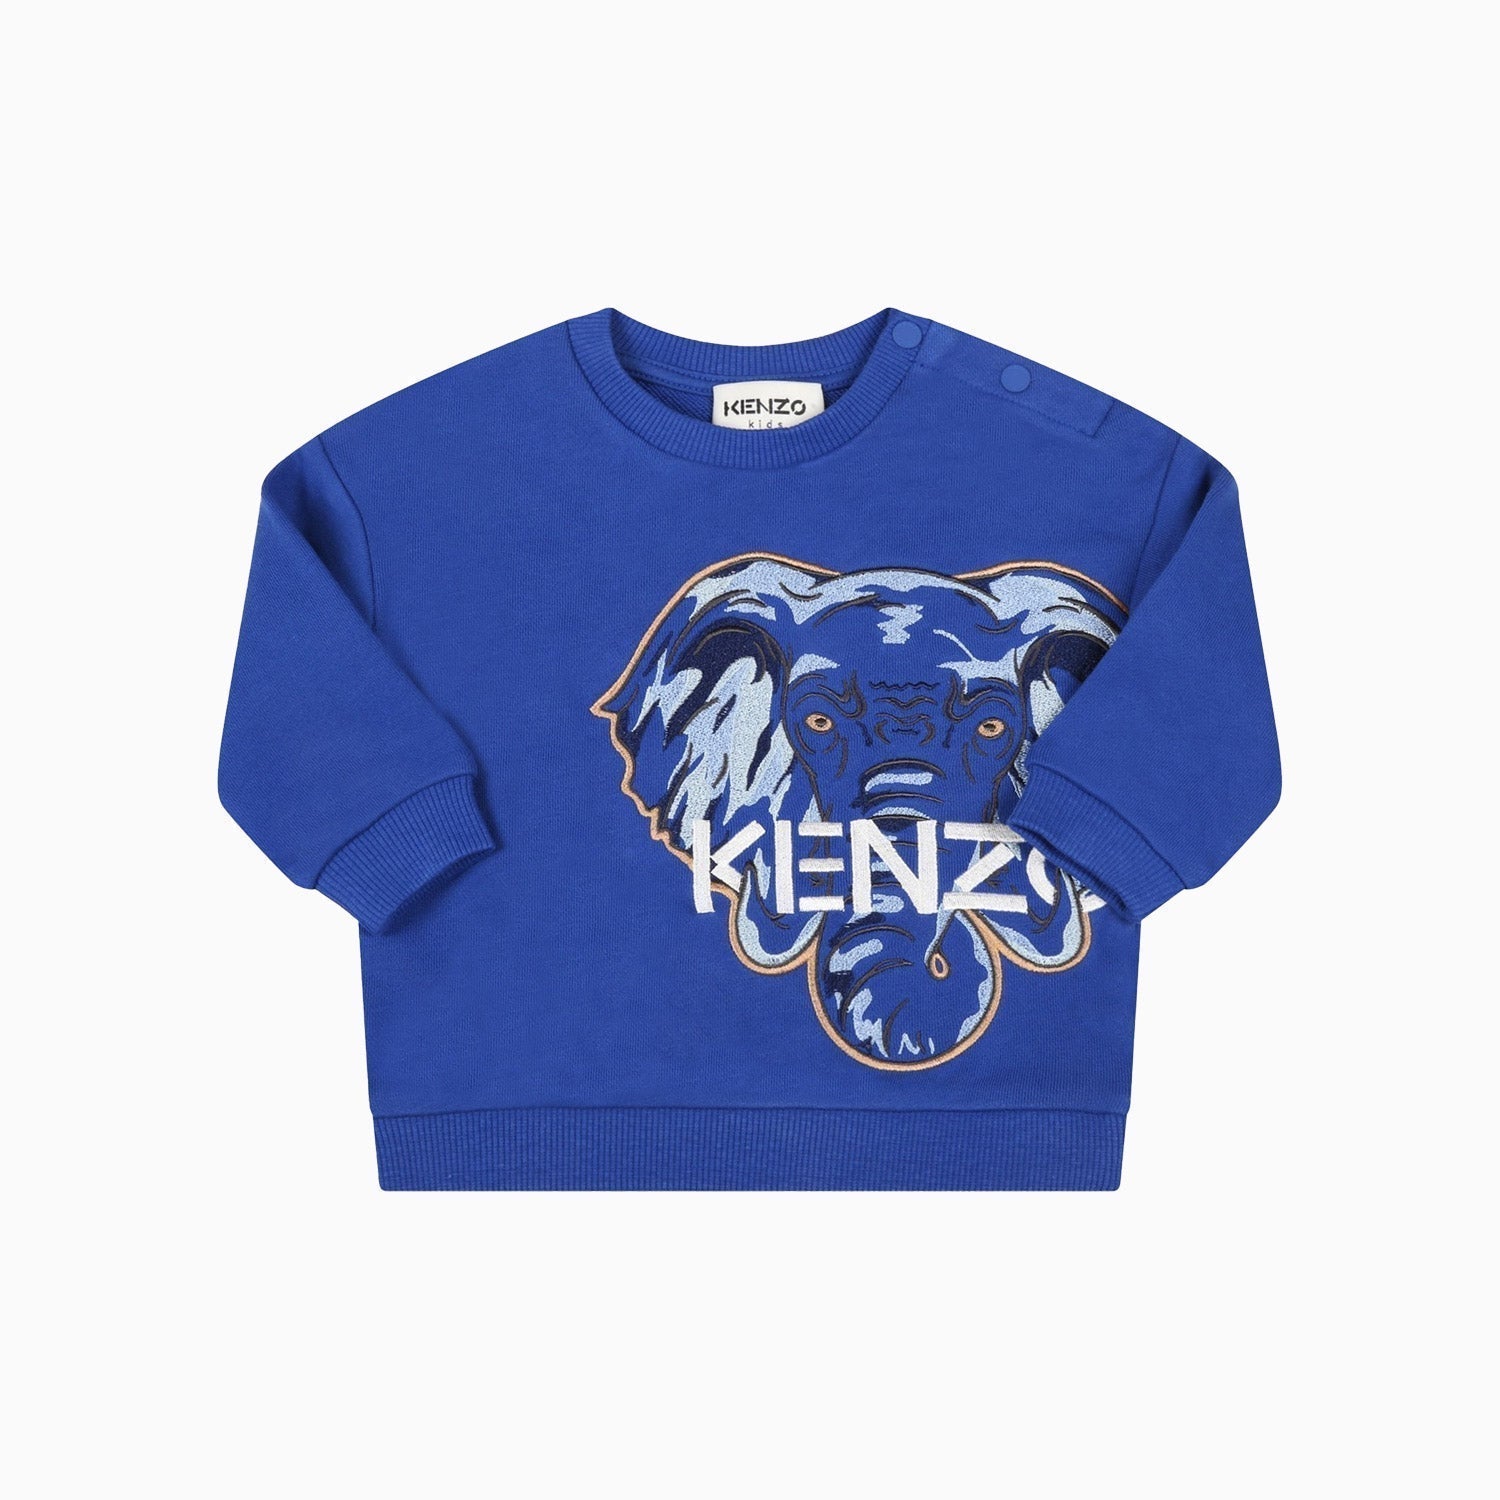 Kenzo Kid's No Brushed Sweat Shirt - Color: Blue - Kids Premium Clothing -